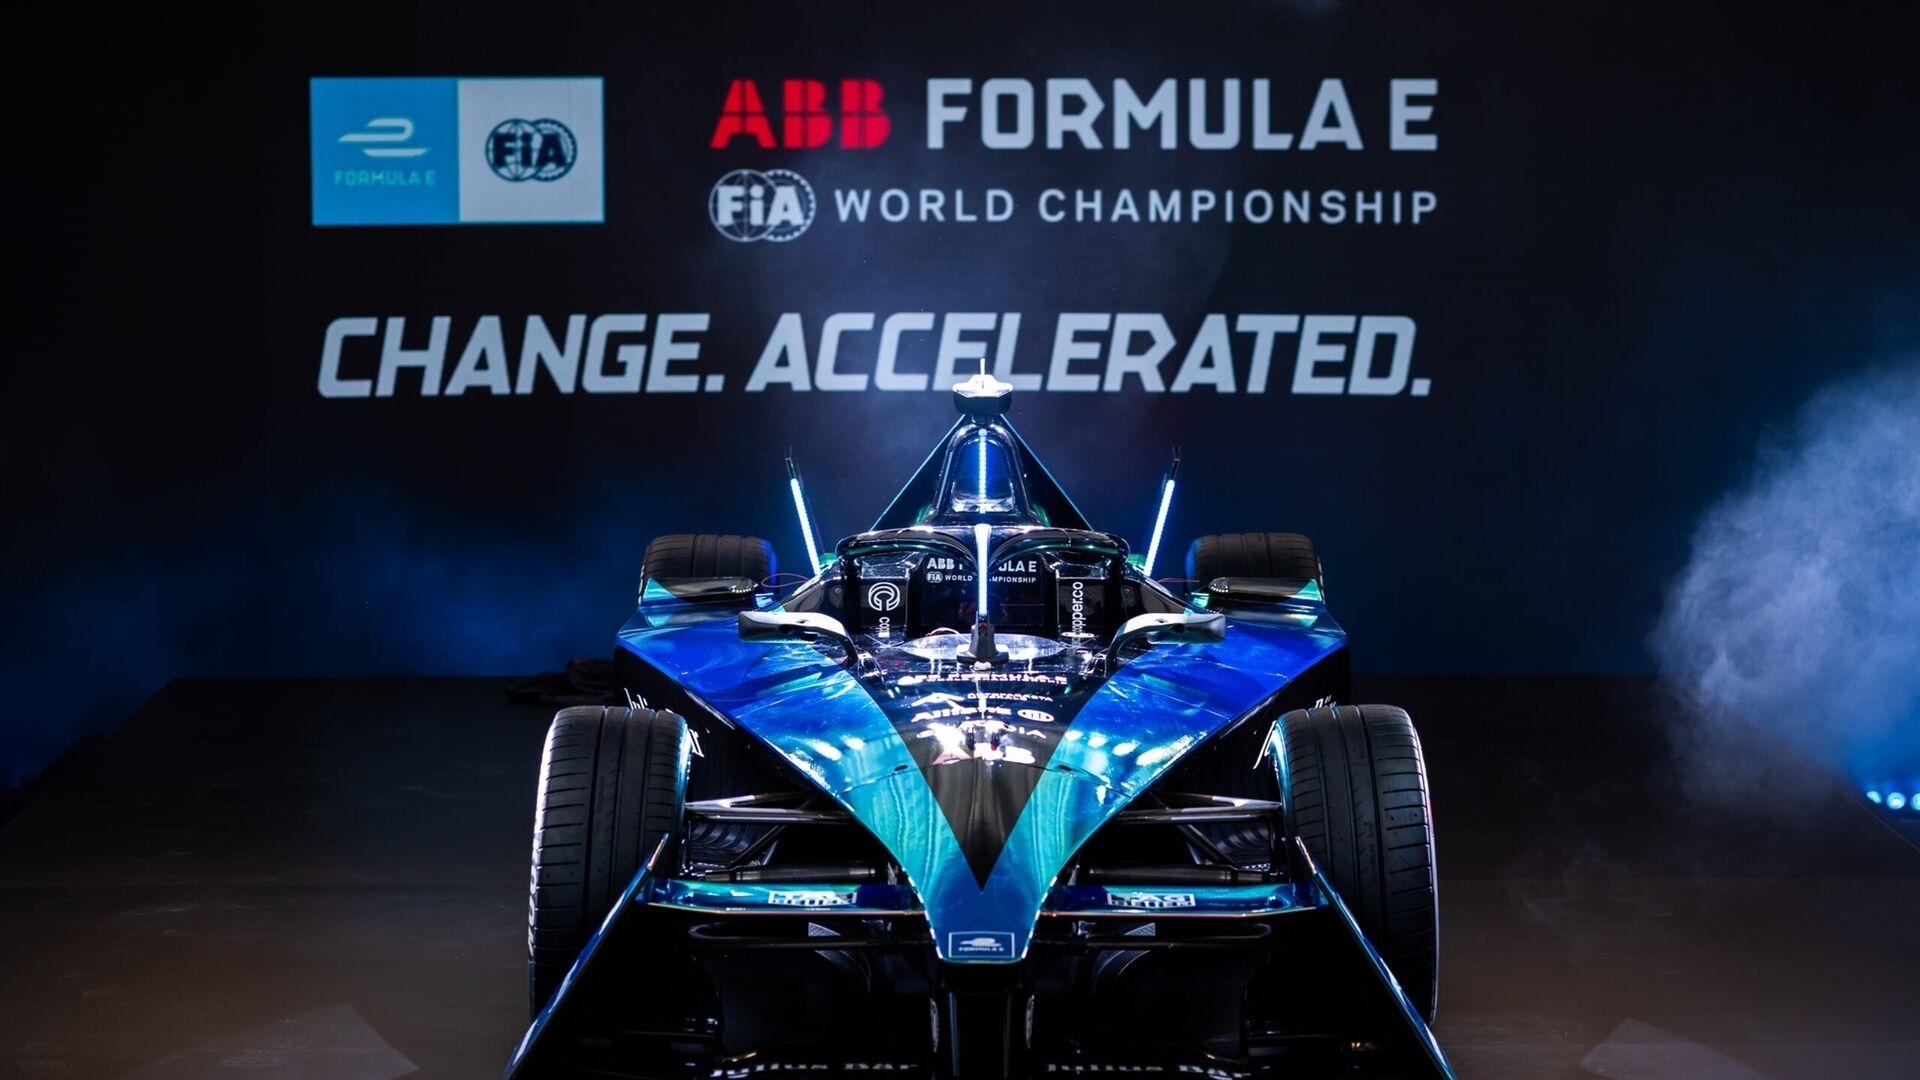 Gen3：Gen3 单座赛车极具创新性，将从 FIA ABB Formula E 世界锦标赛第 XNUMX 赛季开始使用：平衡性能和可持续性